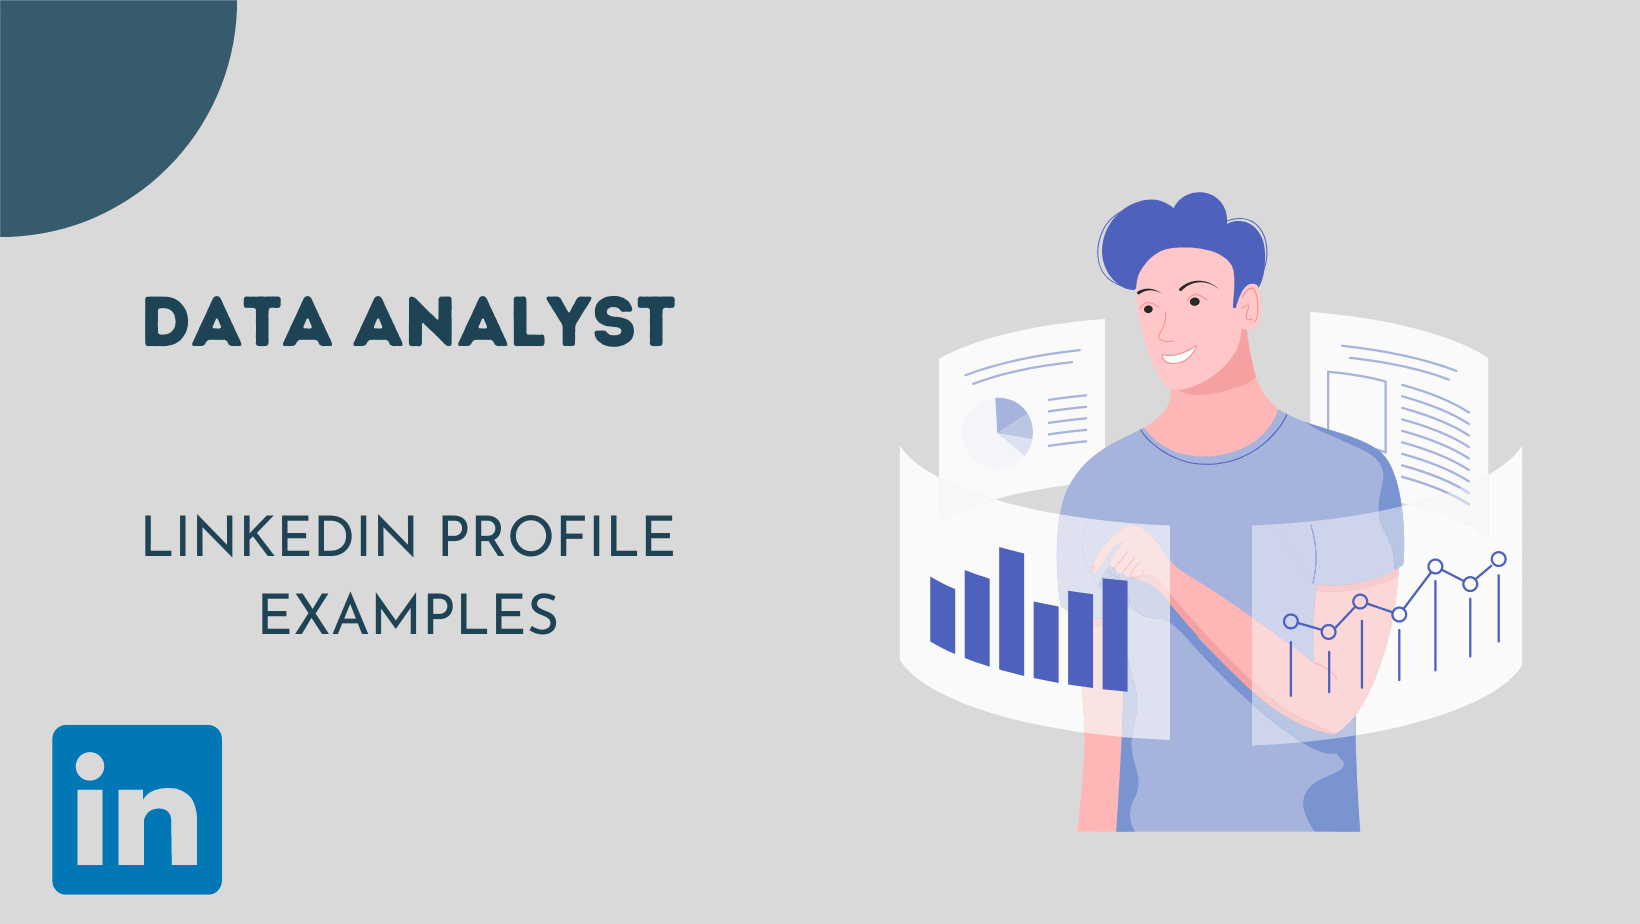 Data Analyst LinkedIn profile